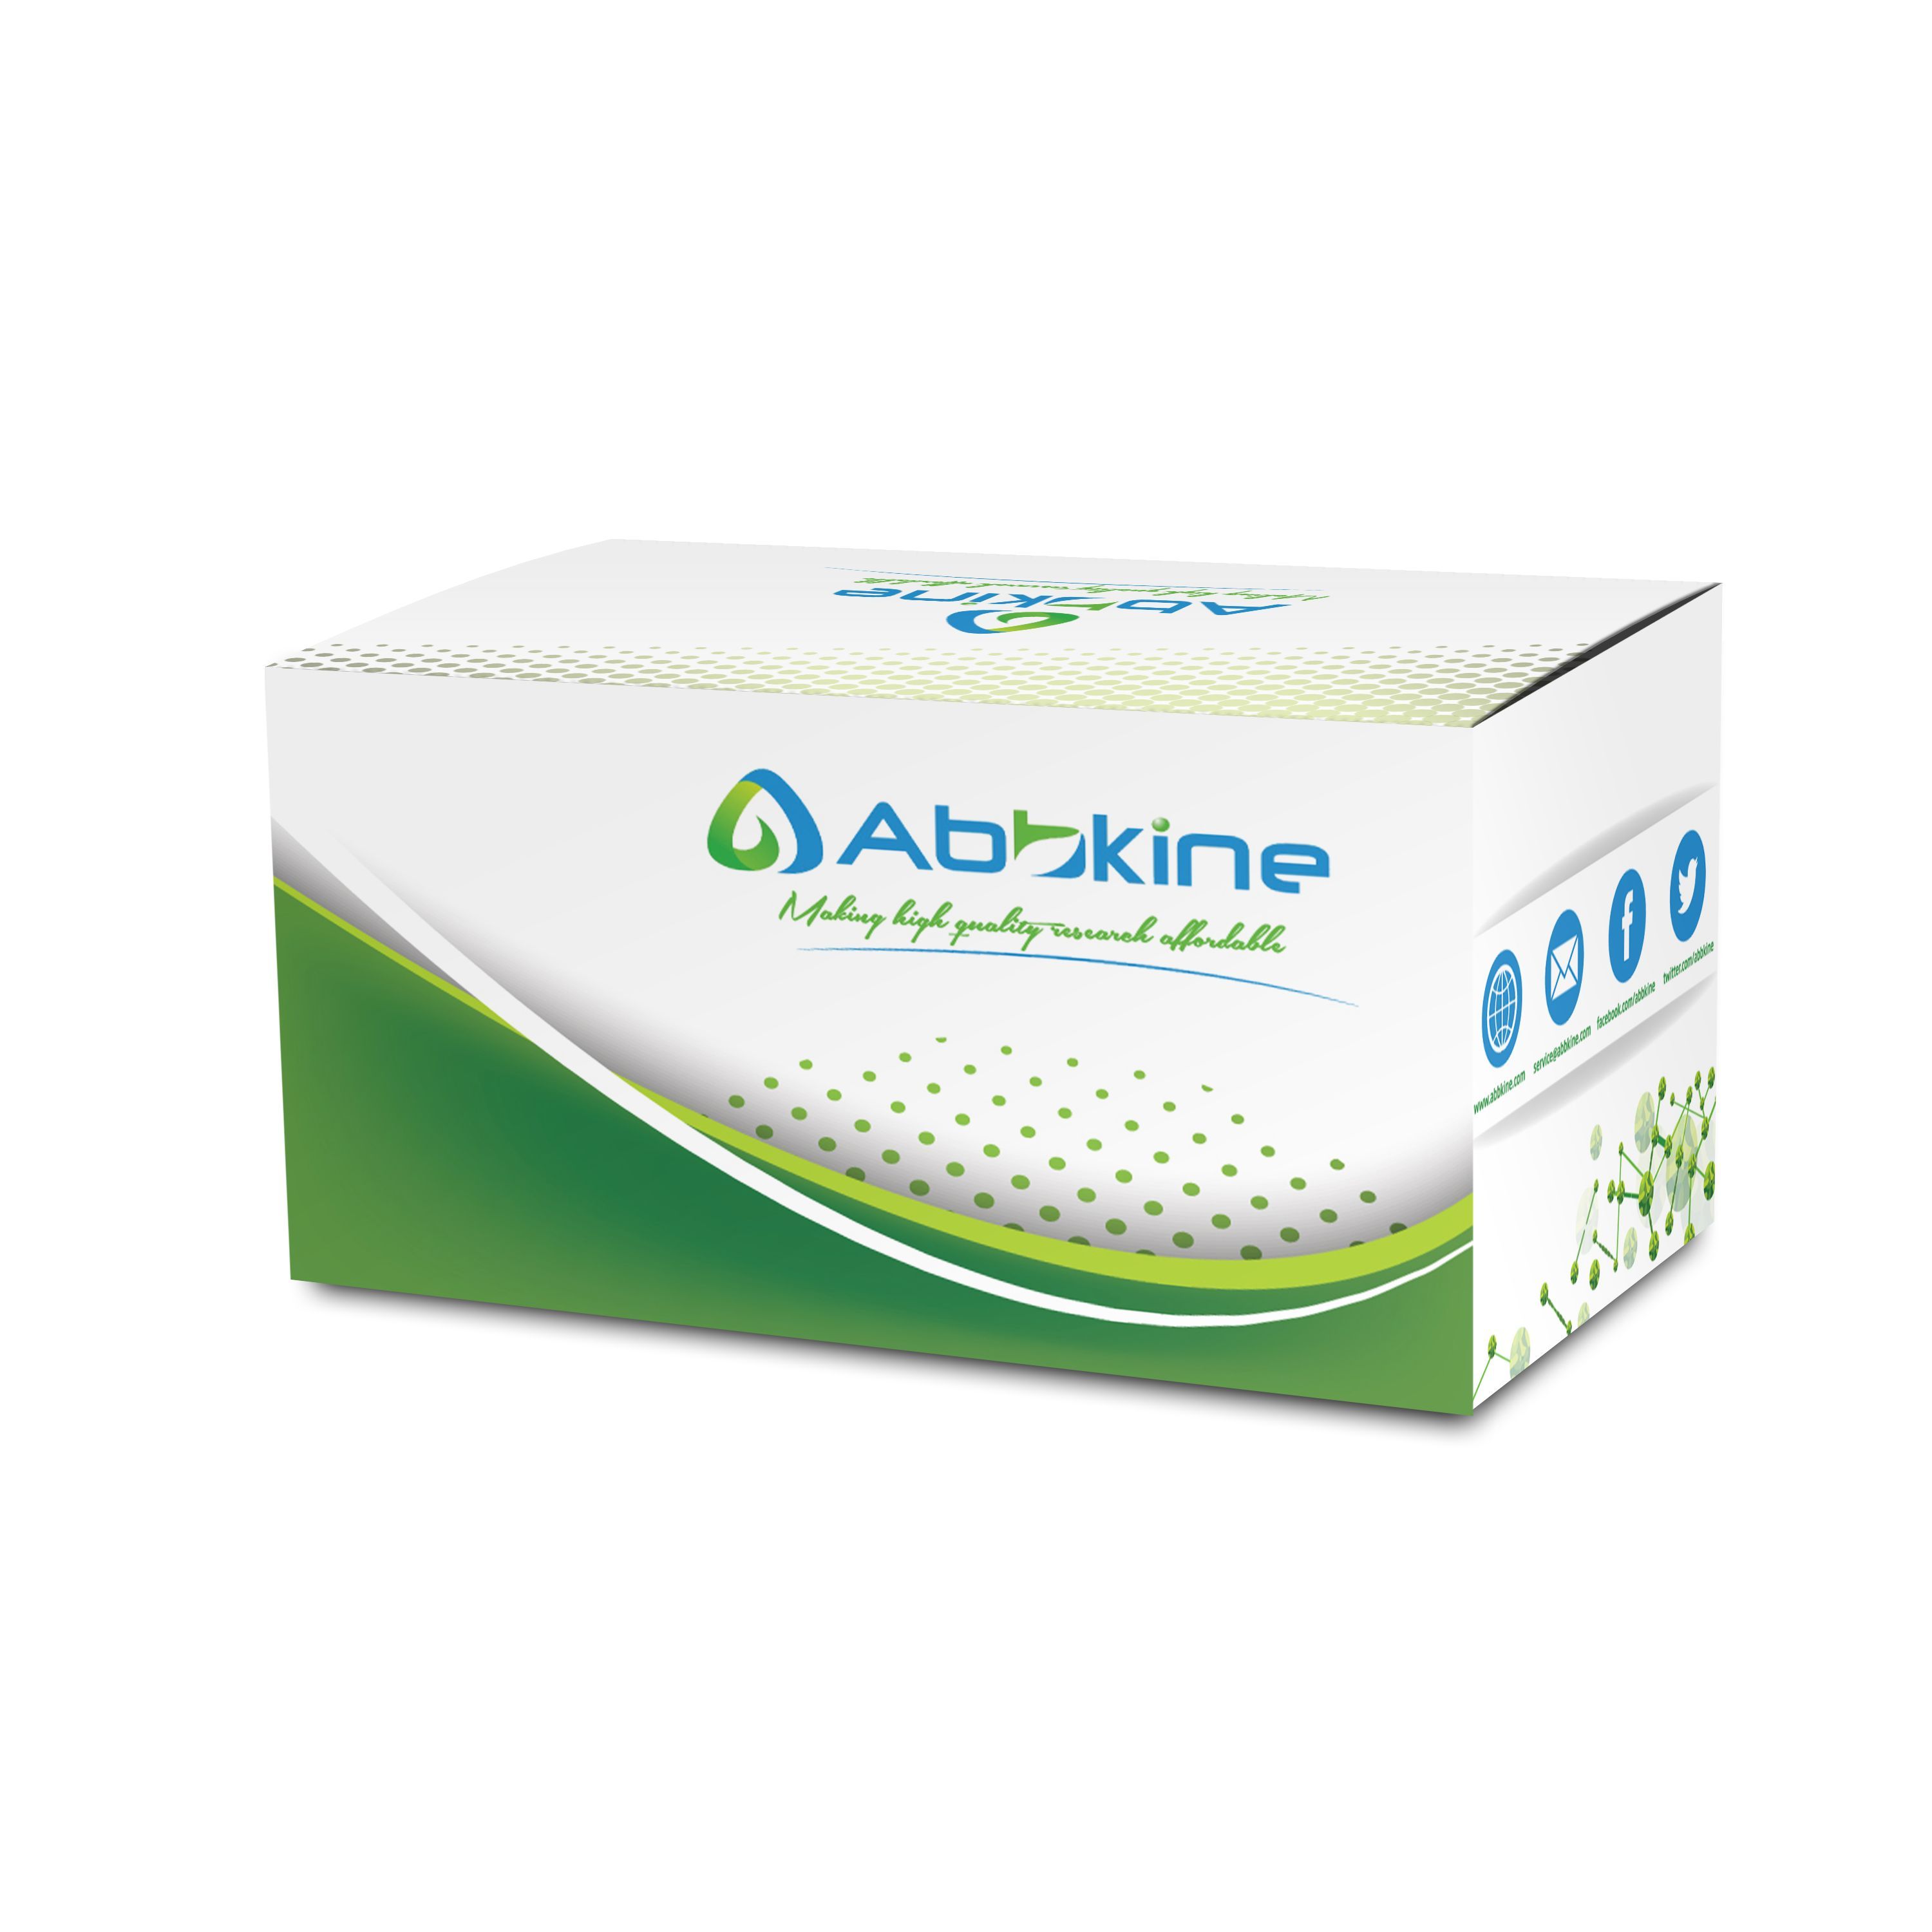 CheKine™琥珀酸脱氢酶（SDH）活性检测试剂盒（比色法）/CheKine™ Succinate Dehydrogenase（SDH) Activity Assay Kit (Colorimetric)